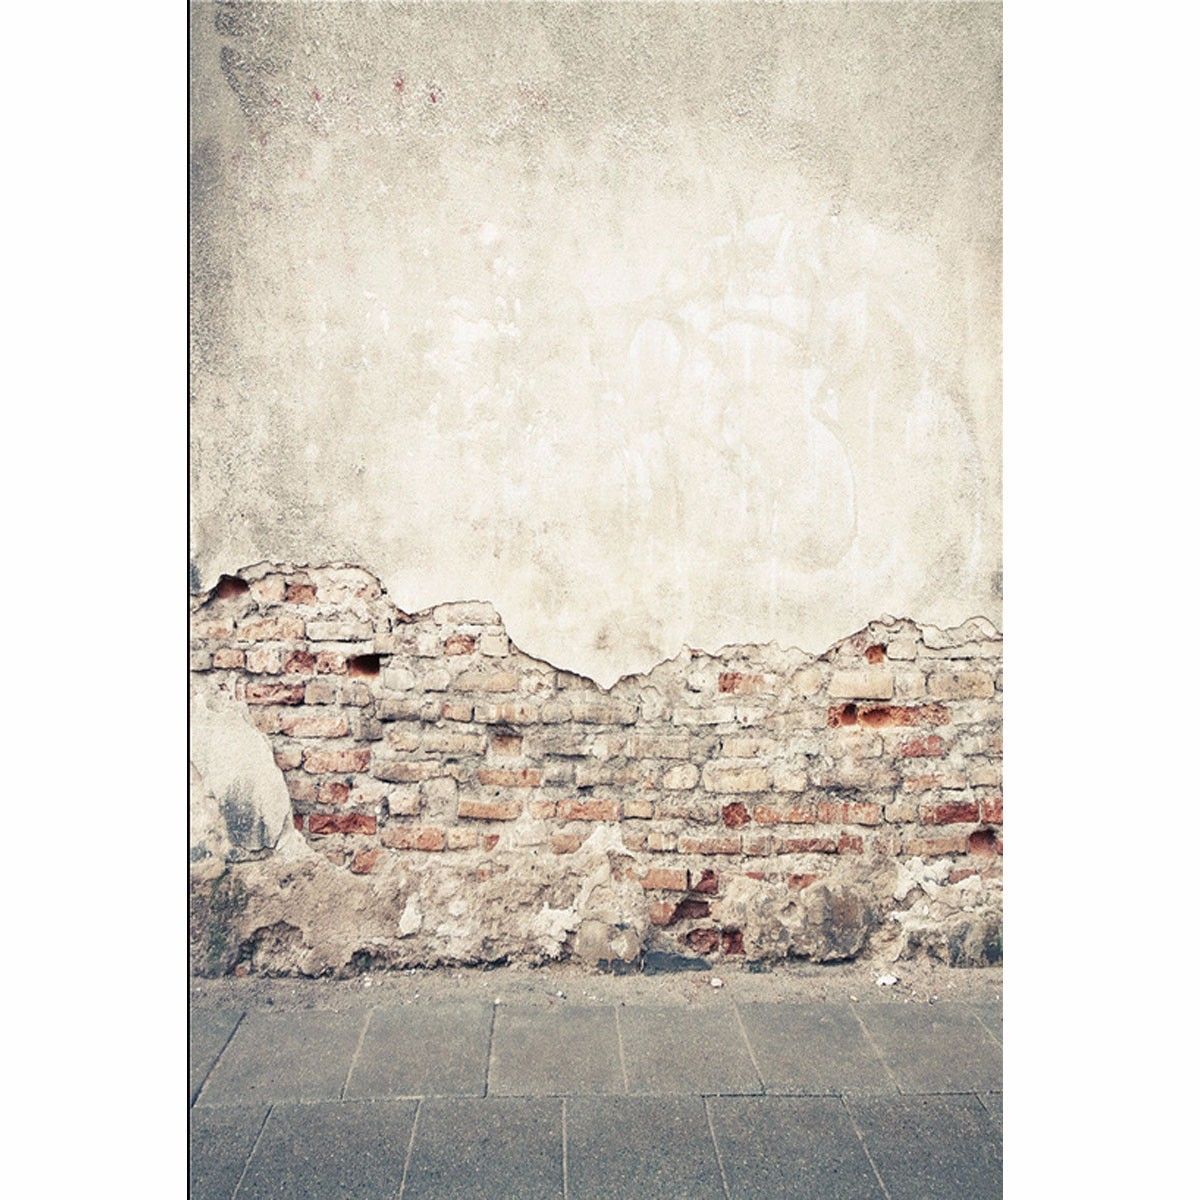 7x5ft-Broken-Brick-Wall-Ruins-Theme-Vinyl-Photography-Background-Backdrop-Prop-for-Studio-Photo-1168248